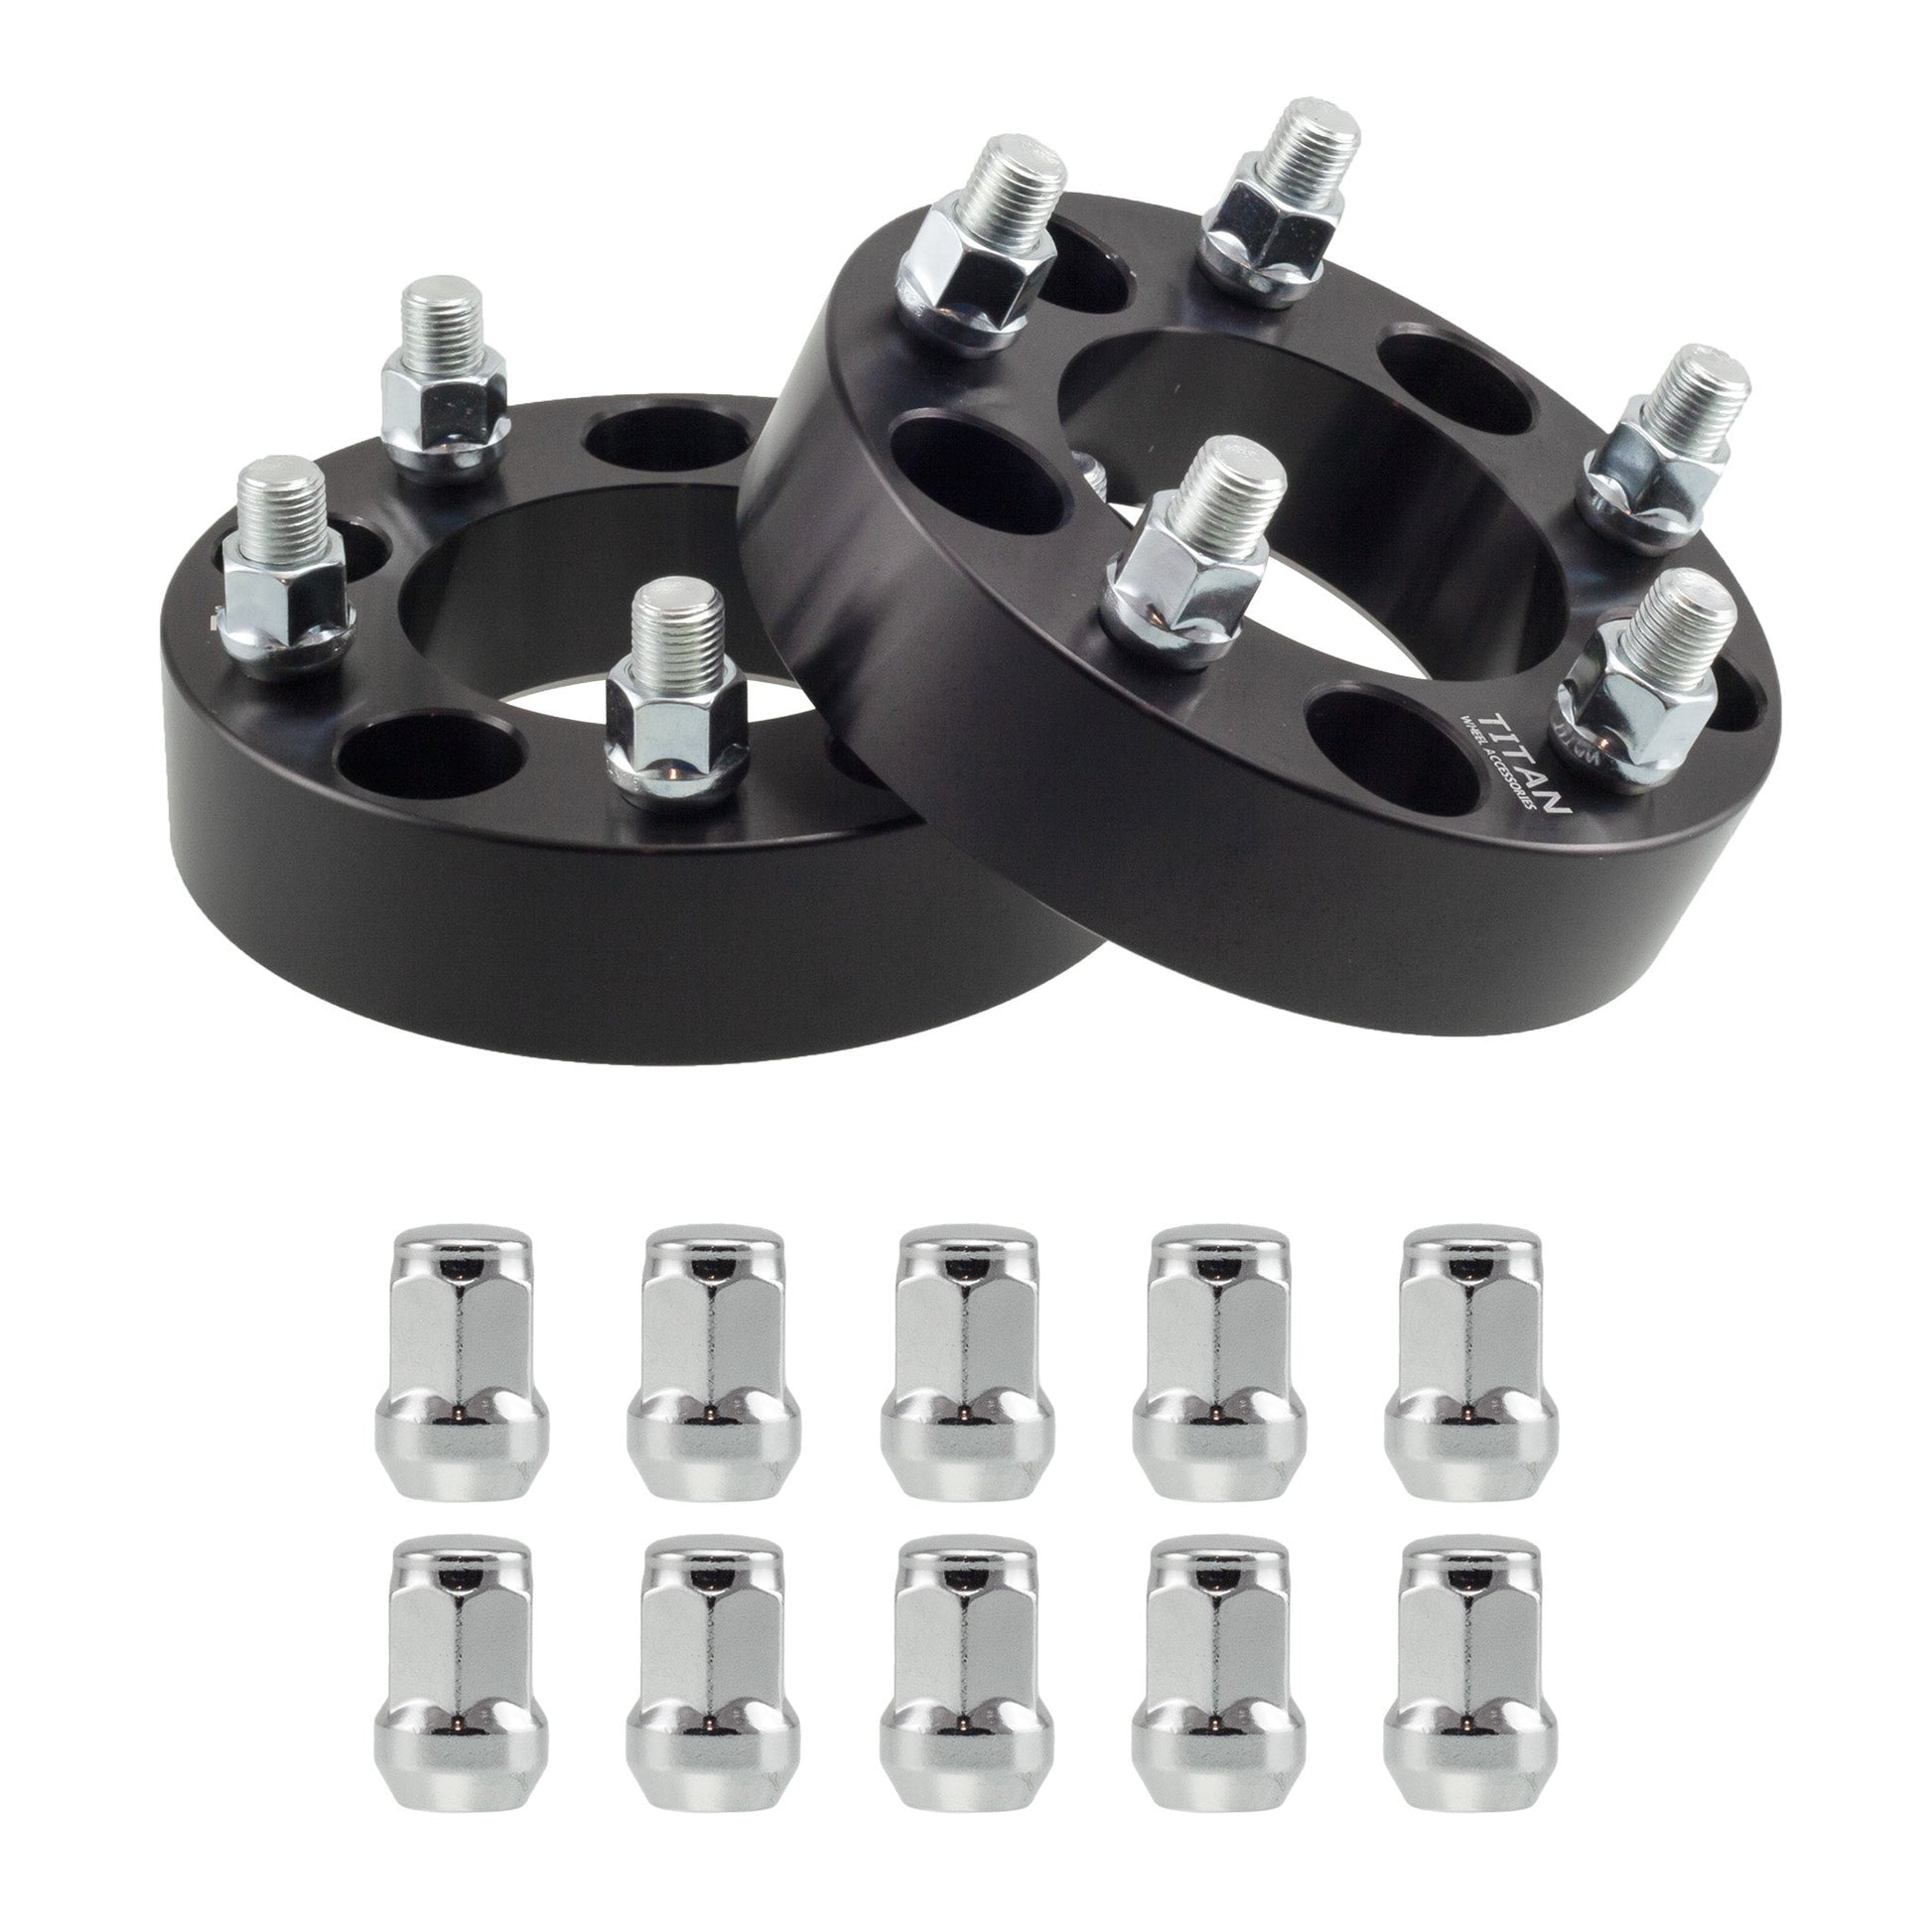 25mm (1") Titan Wheel Spacers for Toyota Camry MR2 Supra Lexus IS | 5x114.3 | 60.1 Hubcentric |12x1.5 Studs | Titan Wheel Accessories